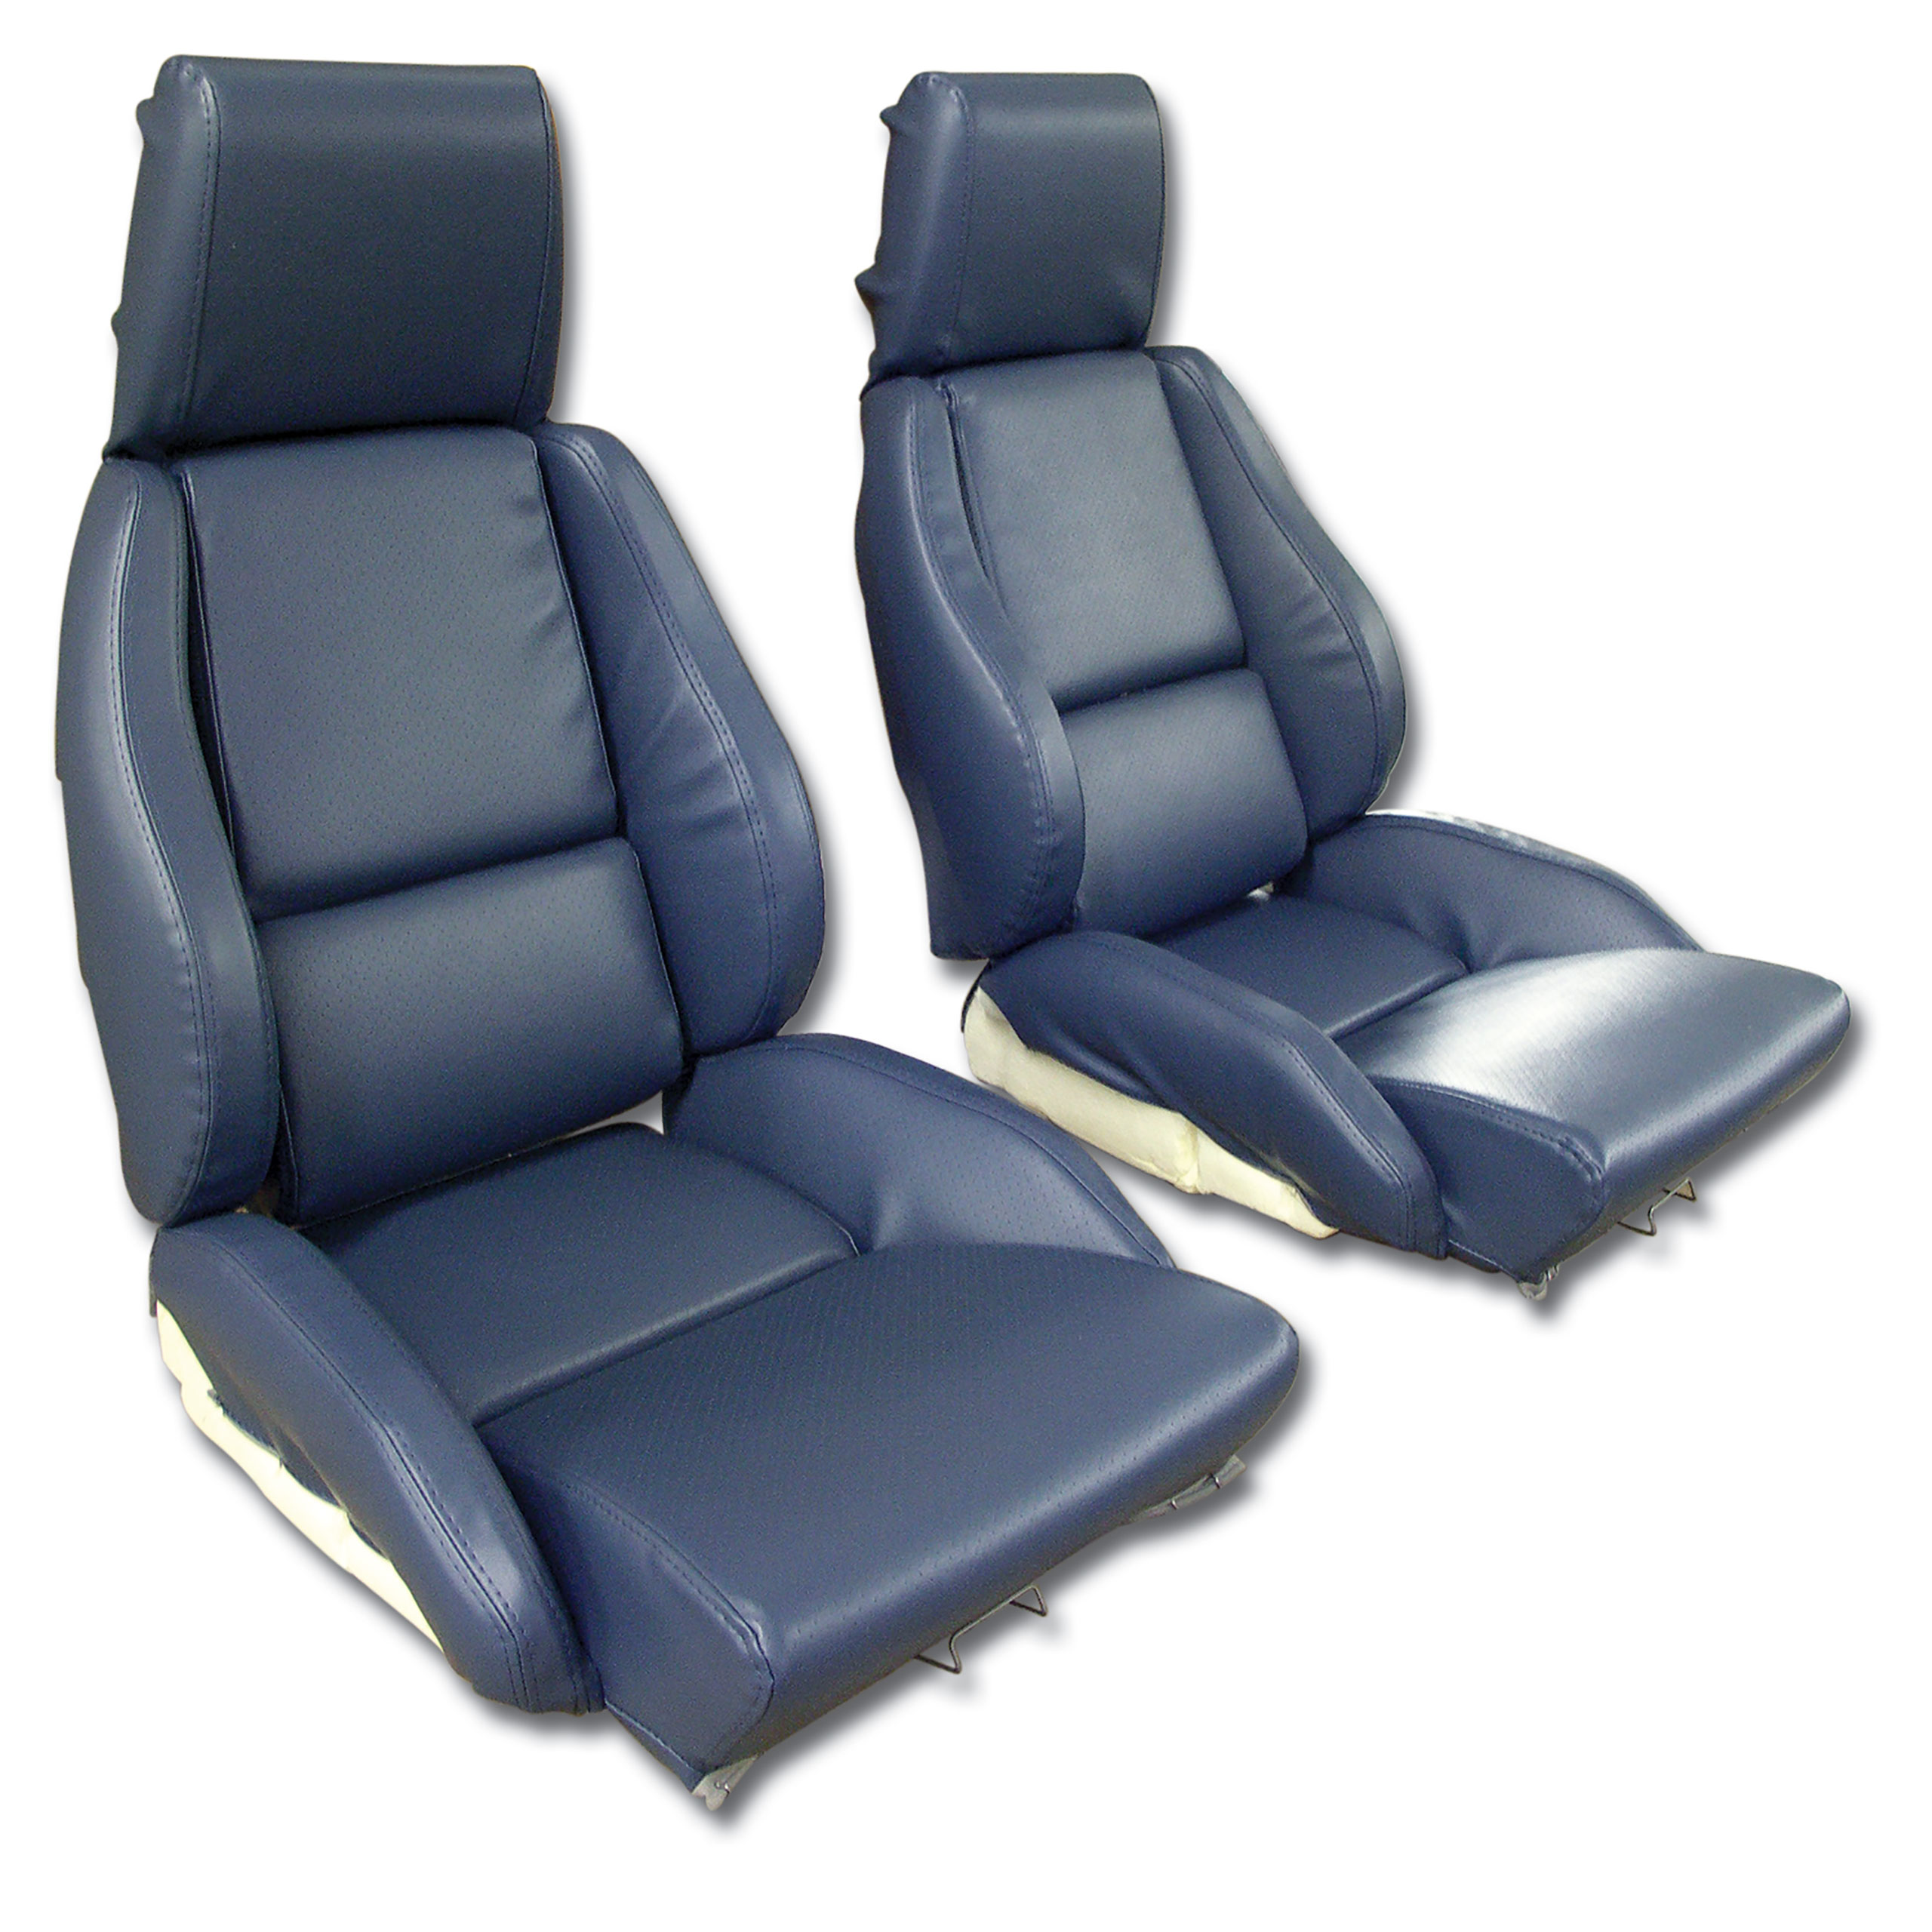 1984-85 Corvette C4 Mounted Leather-Like Vinyl Seat Covers Blue Standard CA-422970 